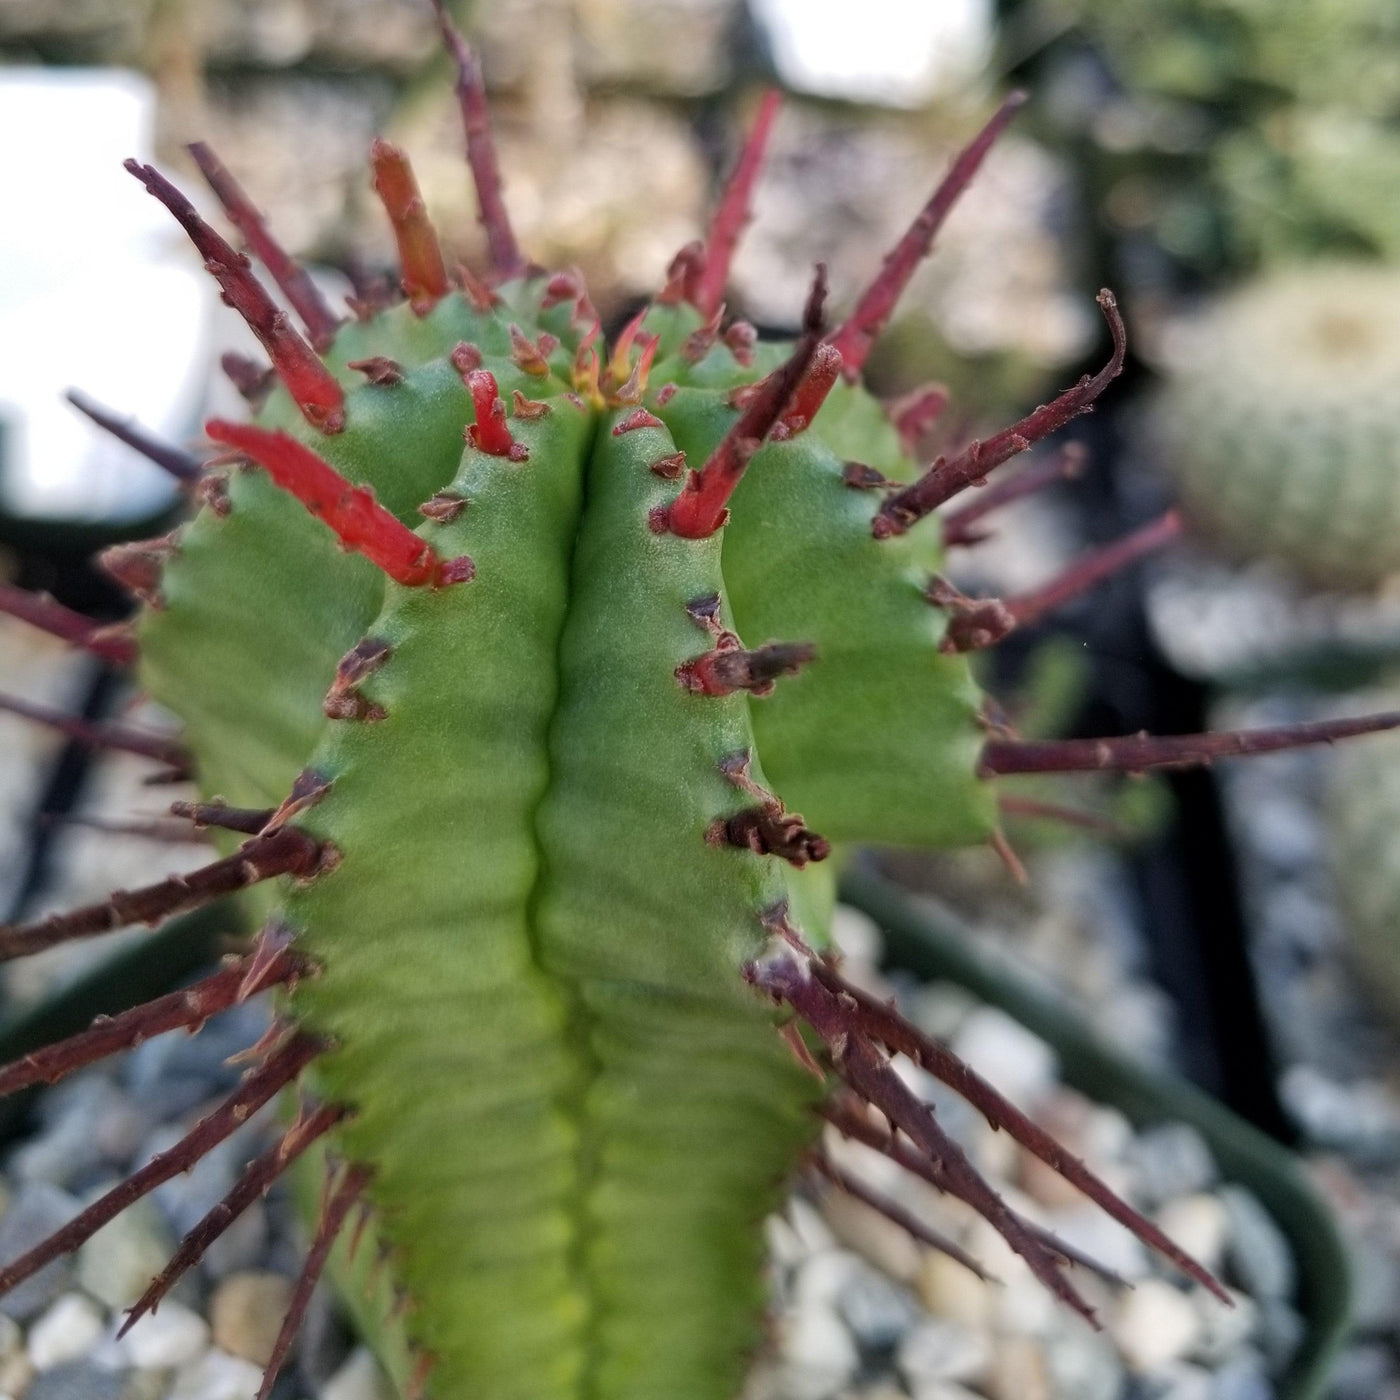 Euphorbia heptagona